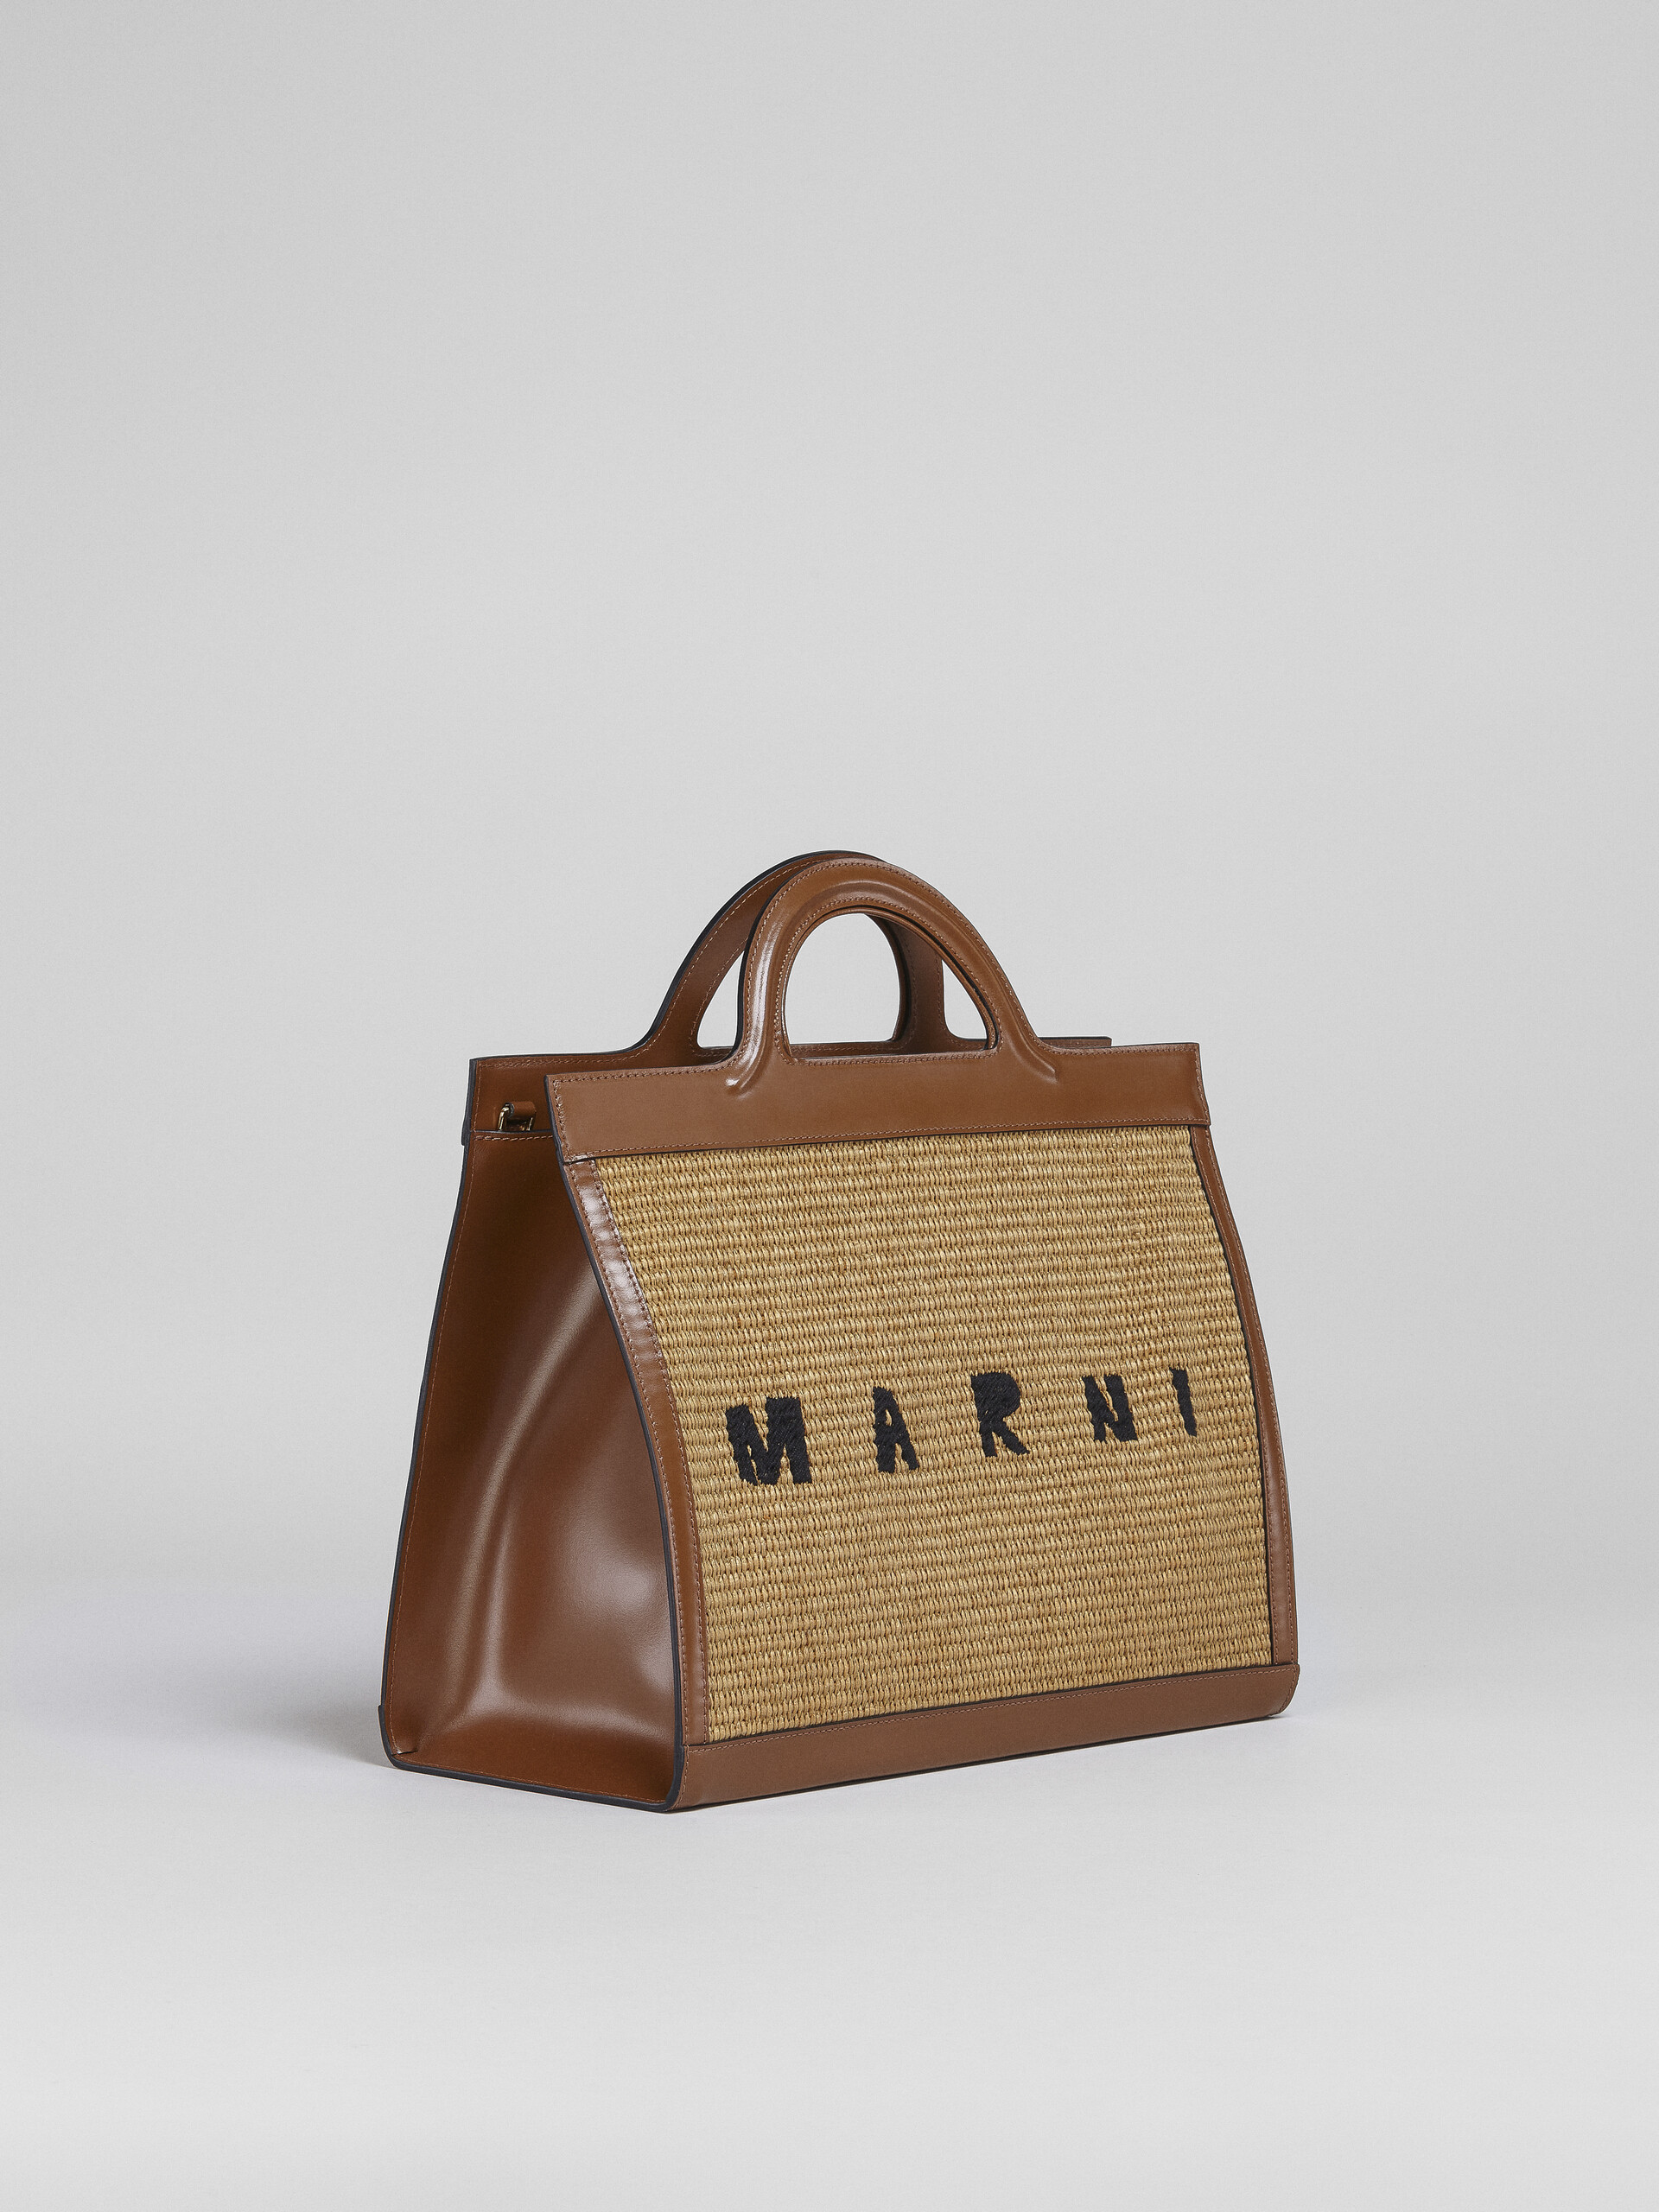 Leather and raffia TROPICALIA tote bag - Handbag - Image 6